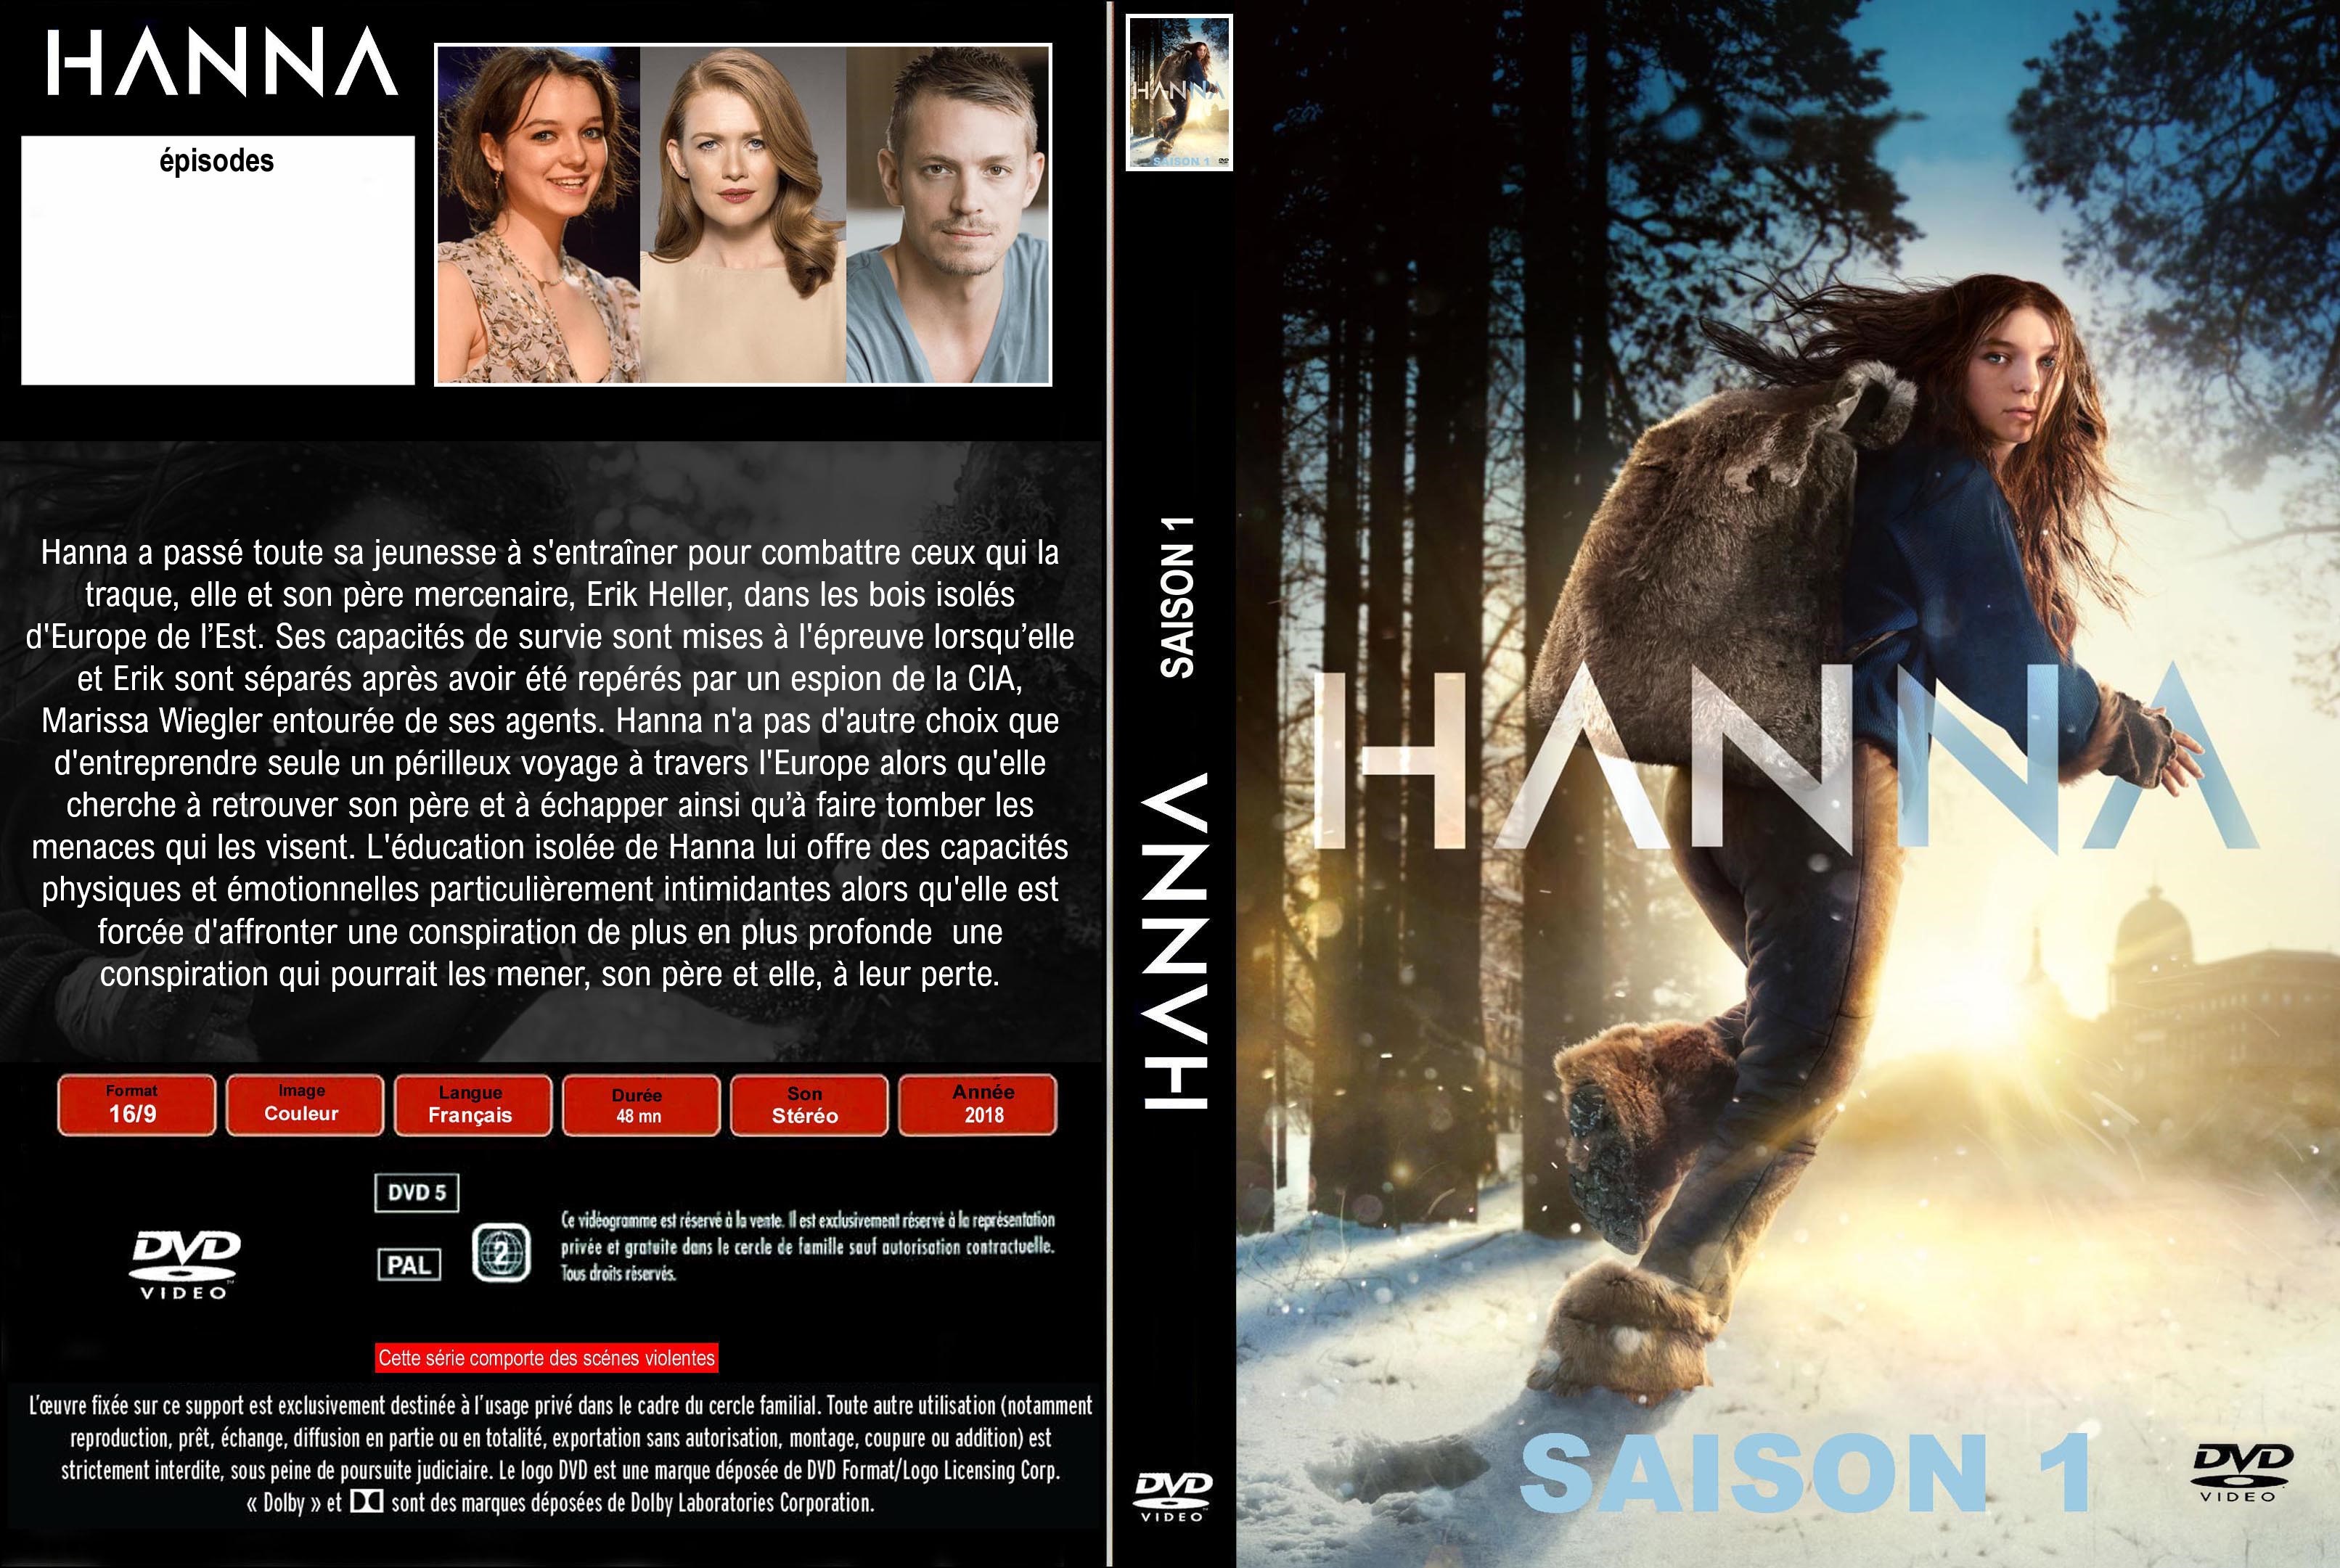 Jaquette DVD Hanna saison 1 custom